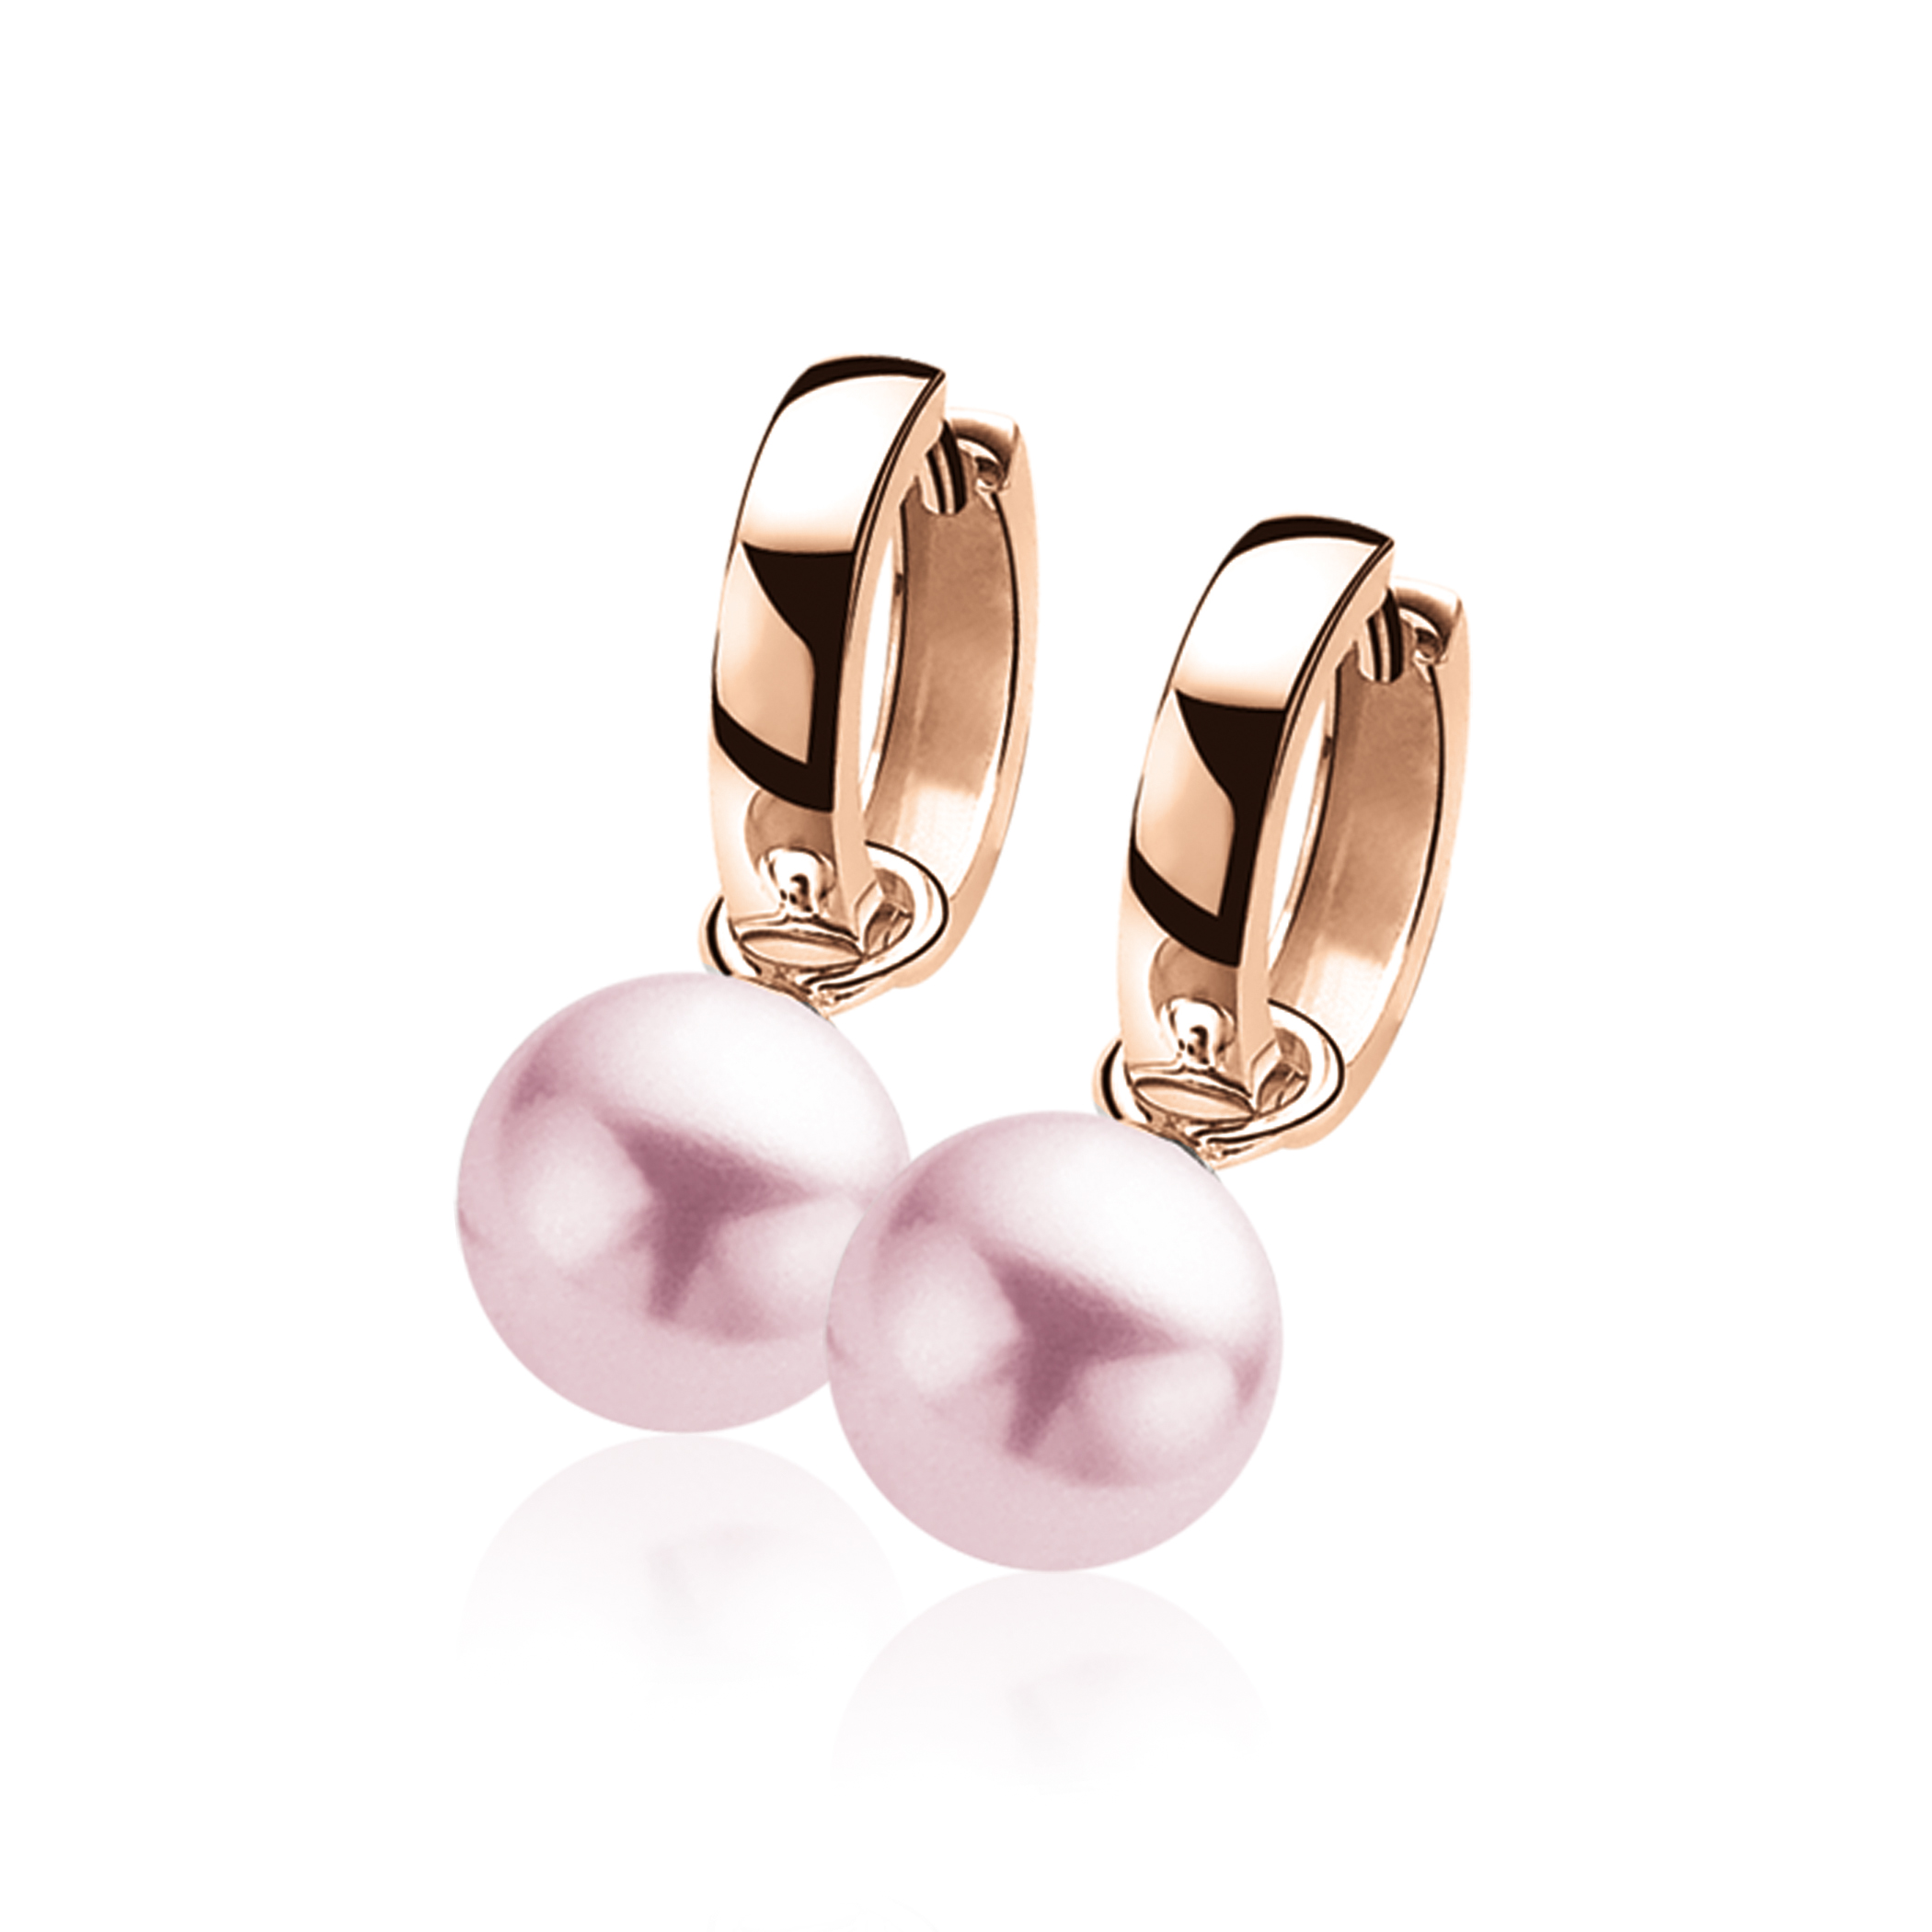 10mm ZINZI Rose Gold Plated Sterling Silver Earrings Pendants Pearl Pink ZICH266RR (excl. hoop earrings)